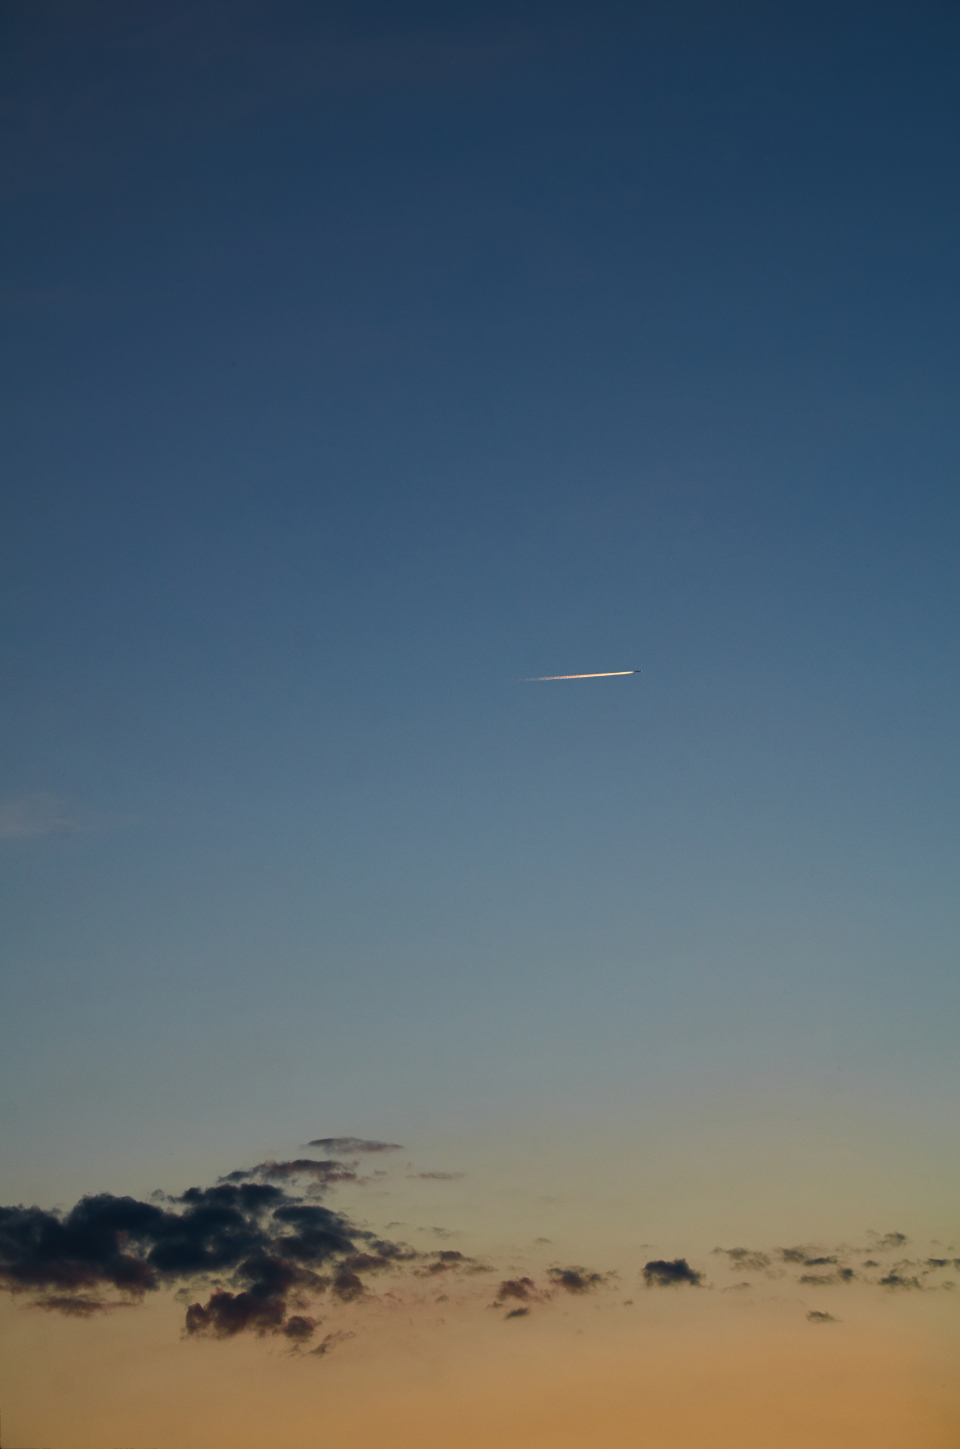 jet airplane sky stream sunset dusk evening blue vibrant plane speed clouds contrail streak mobile wallpaper dawn vapor 蒸汽 黎明 移动式壁纸 条纹 航迹 云彩 速度 飞机 生机勃勃 蓝色 晚上 黄昏 日落 溪流 天空 飞机 喷气机